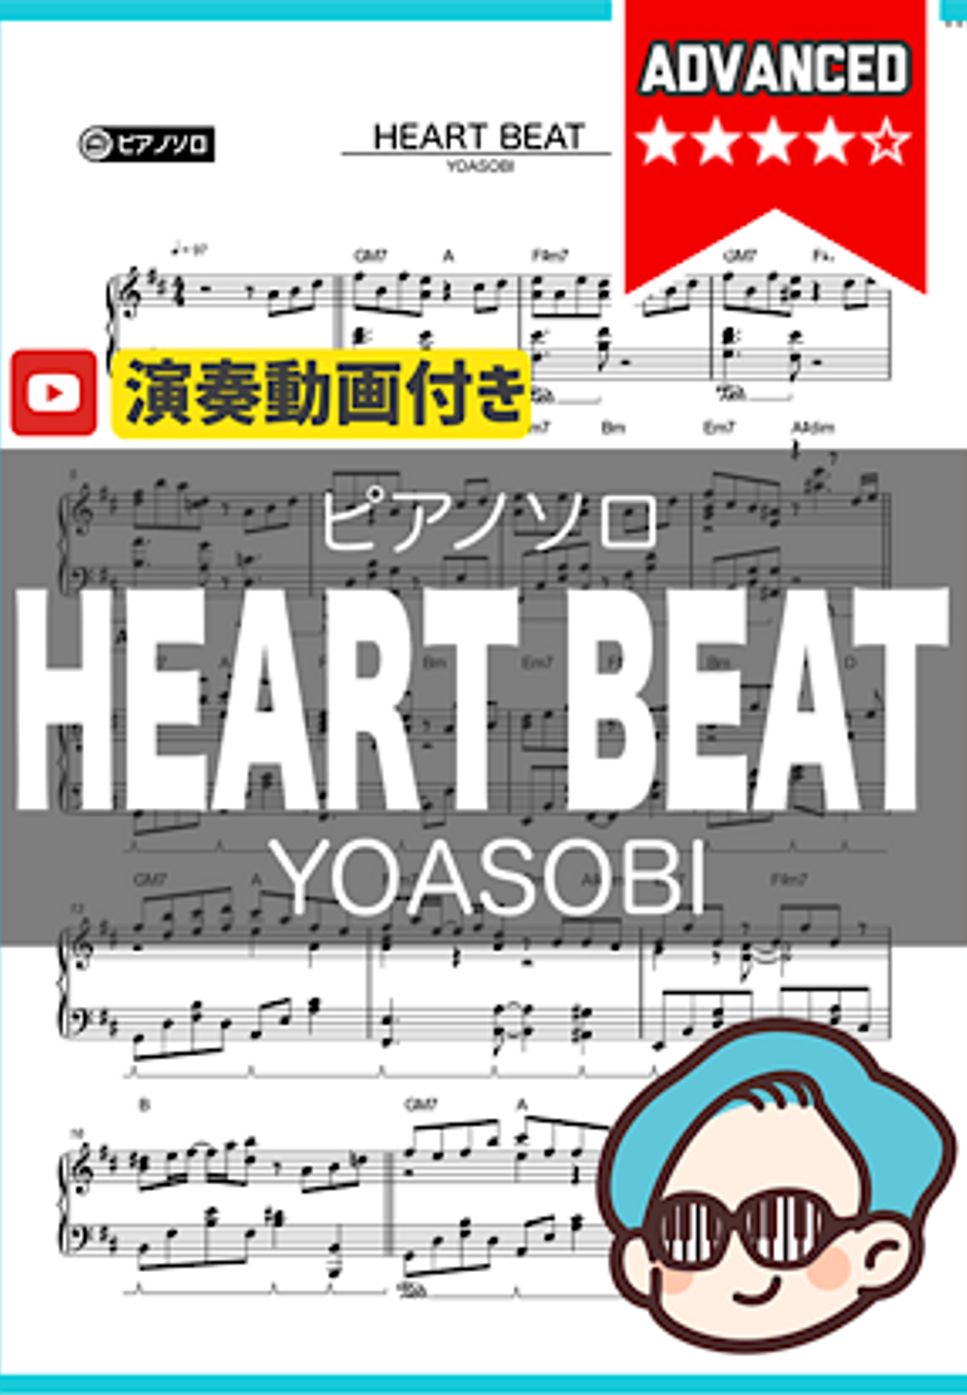 YOASOBI - HEART BEAT by シータピアノ